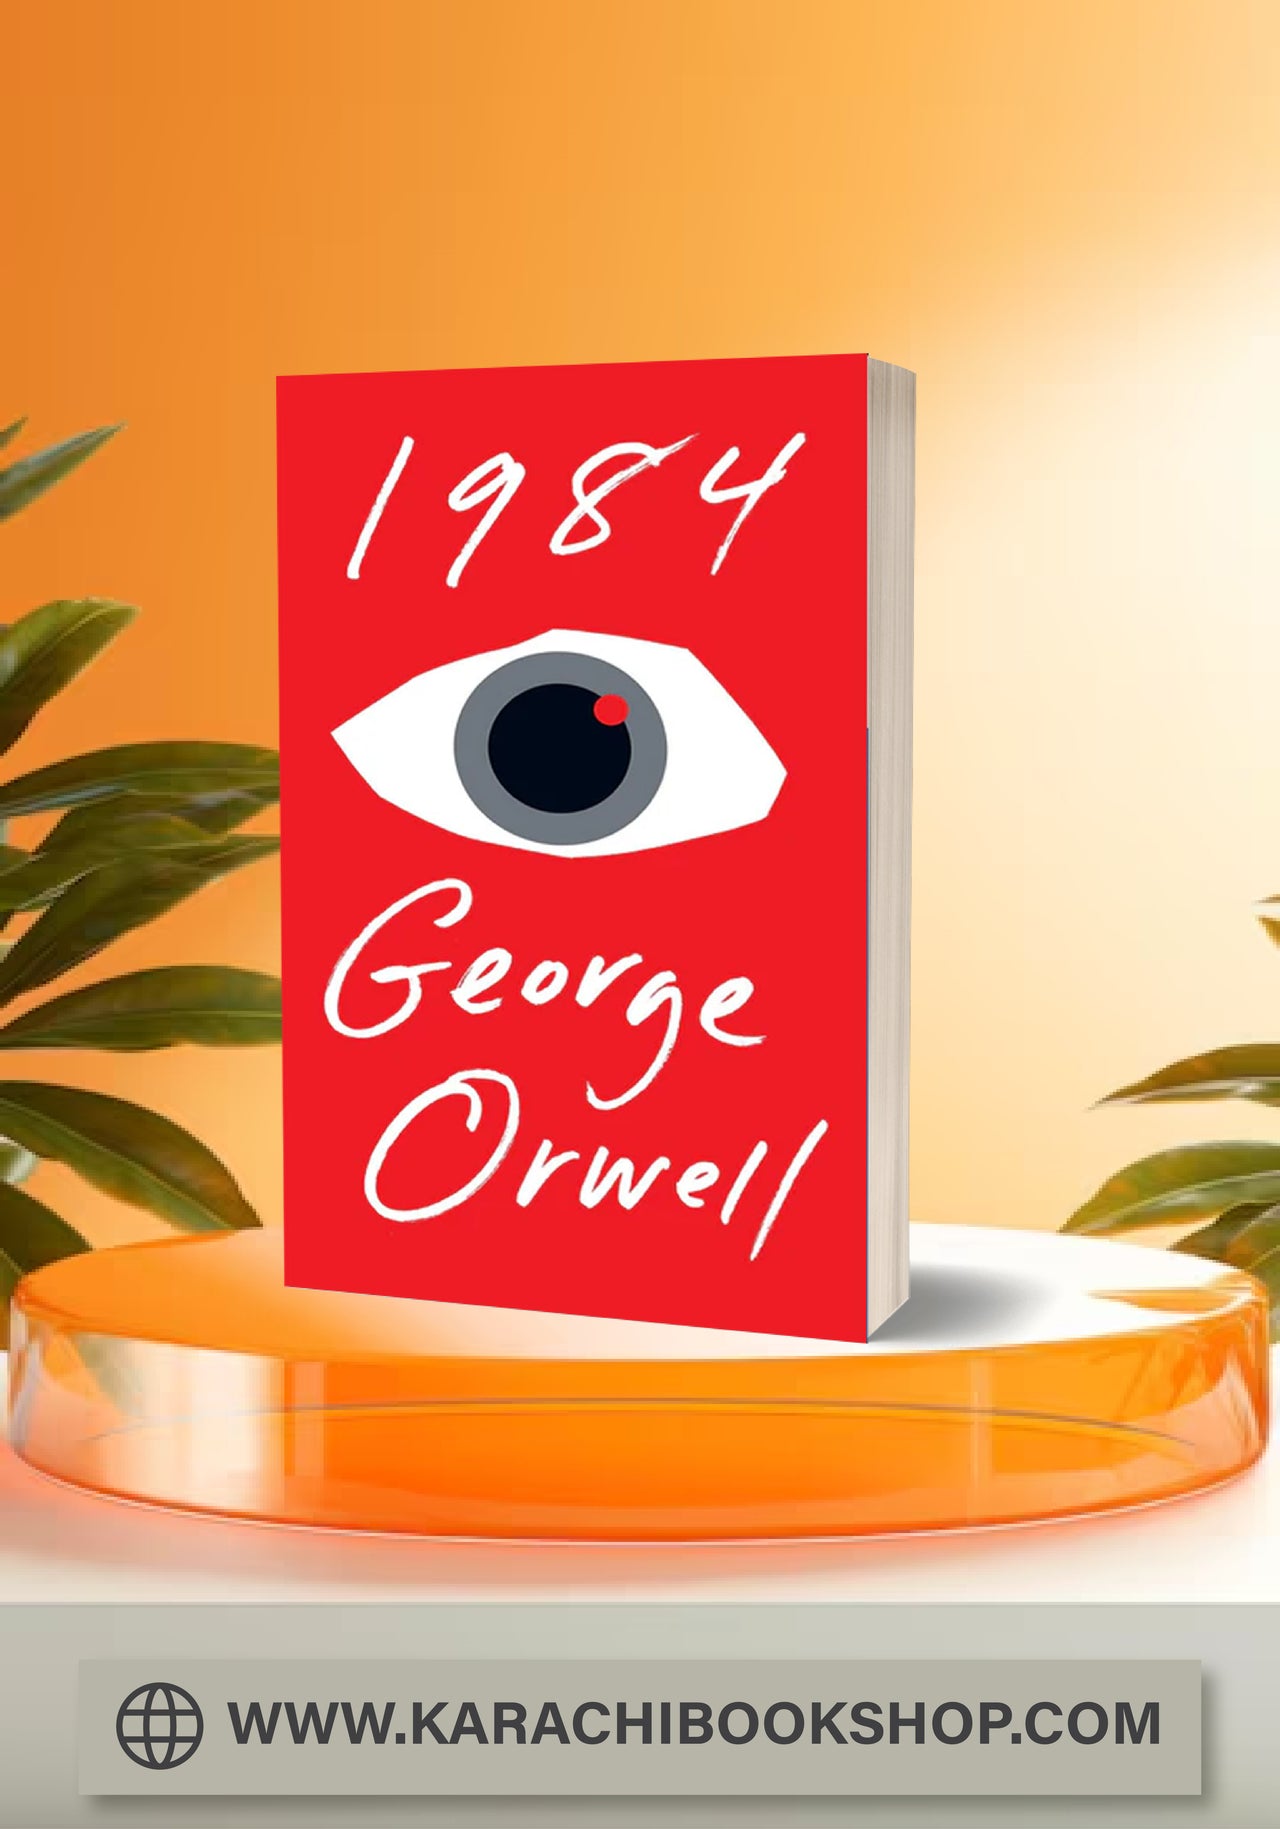 1984 BY GEORGE ORWELL (ORIGINAL)